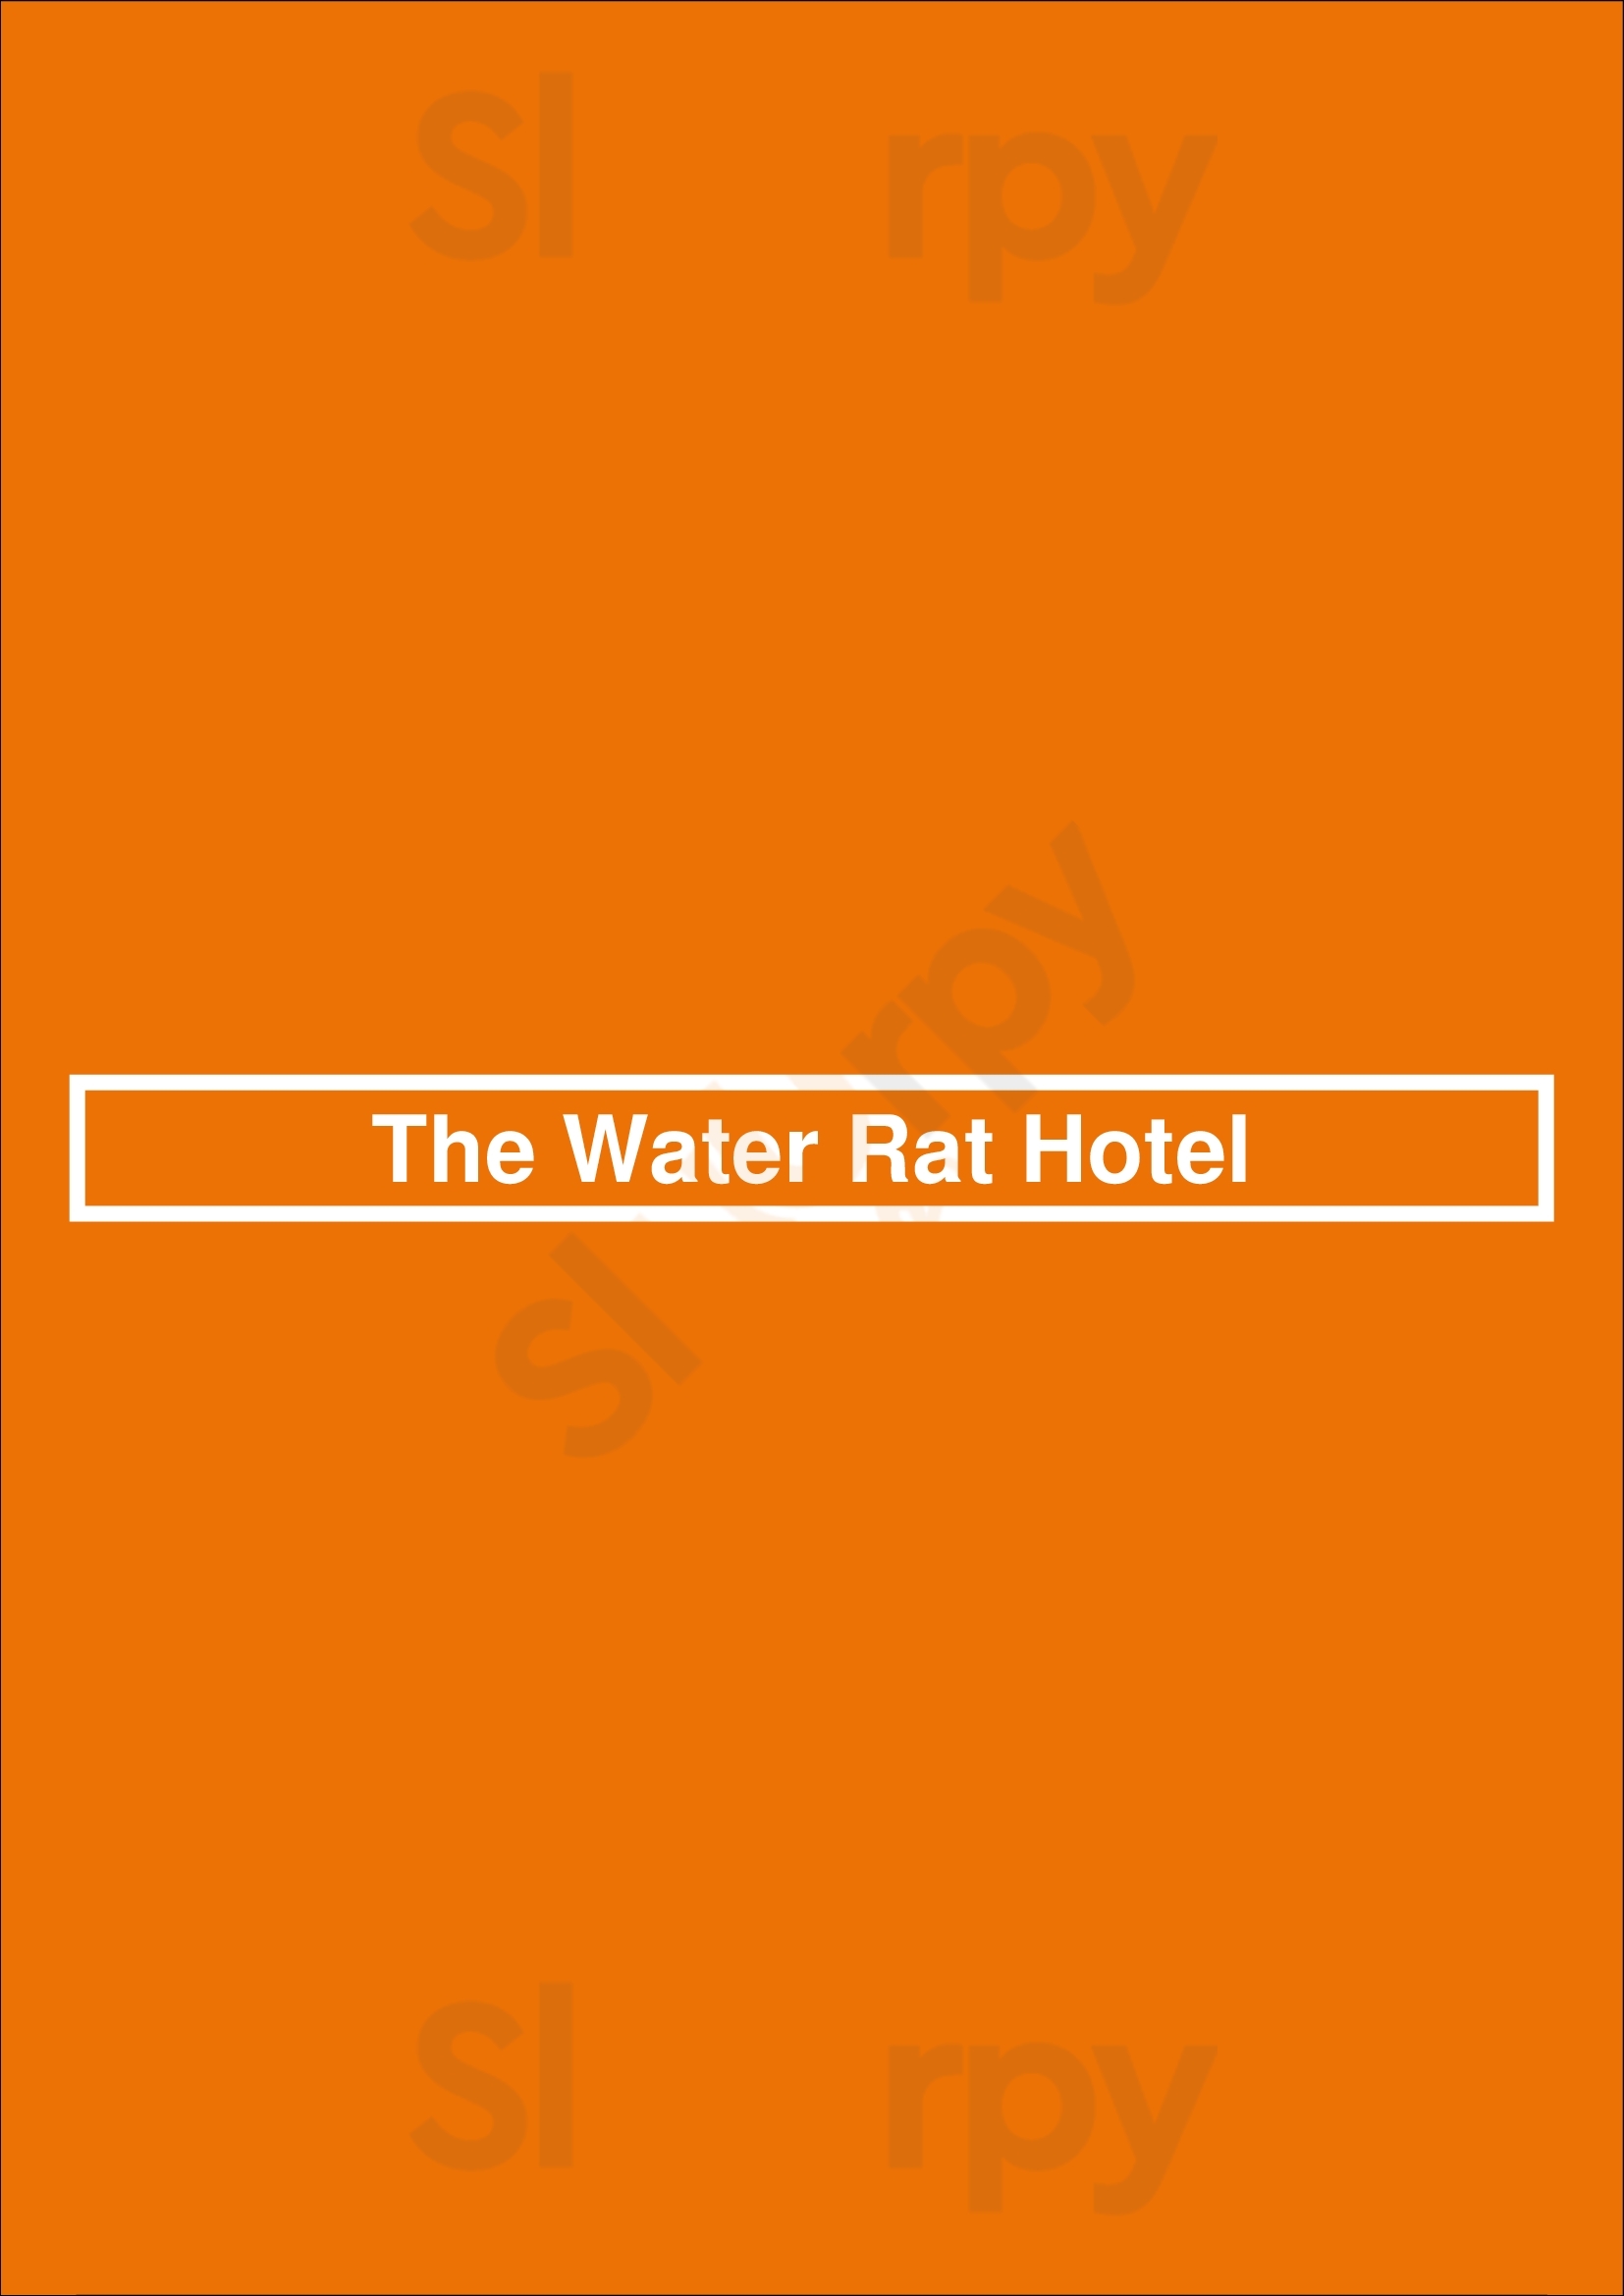 The Water Rat Hotel Melbourne Menu - 1